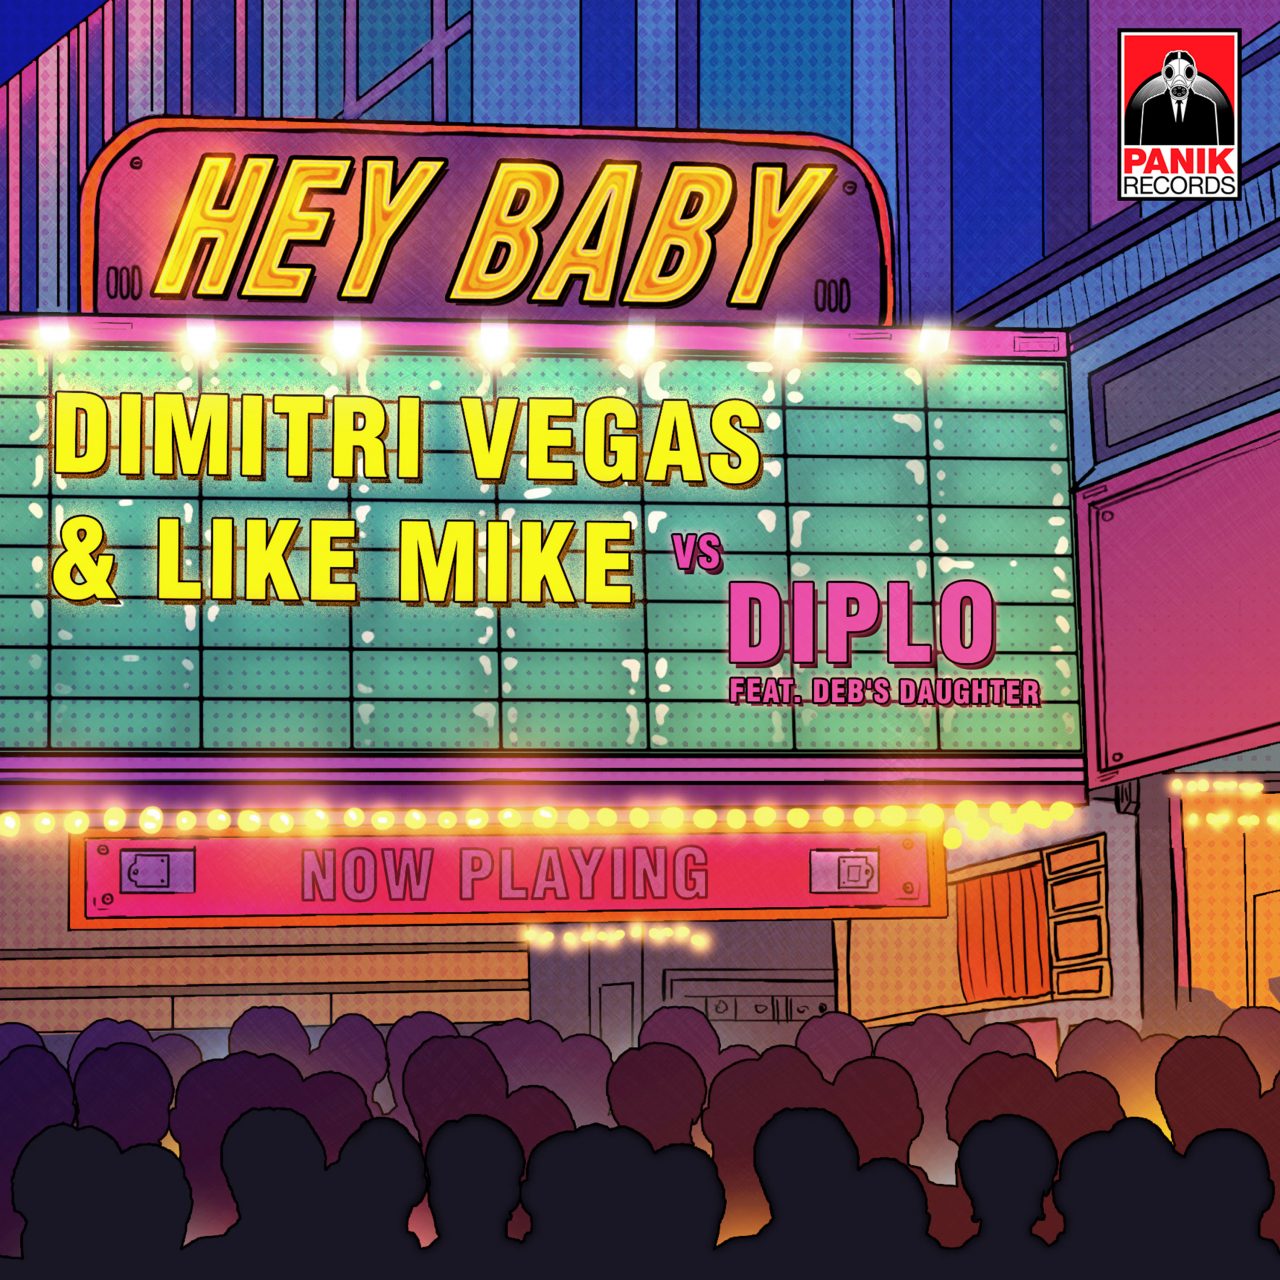 Hey Baby - Οι Dimitri Vegas και Like Mike συνεργάζονται με τον Diplo στο νέο τους single